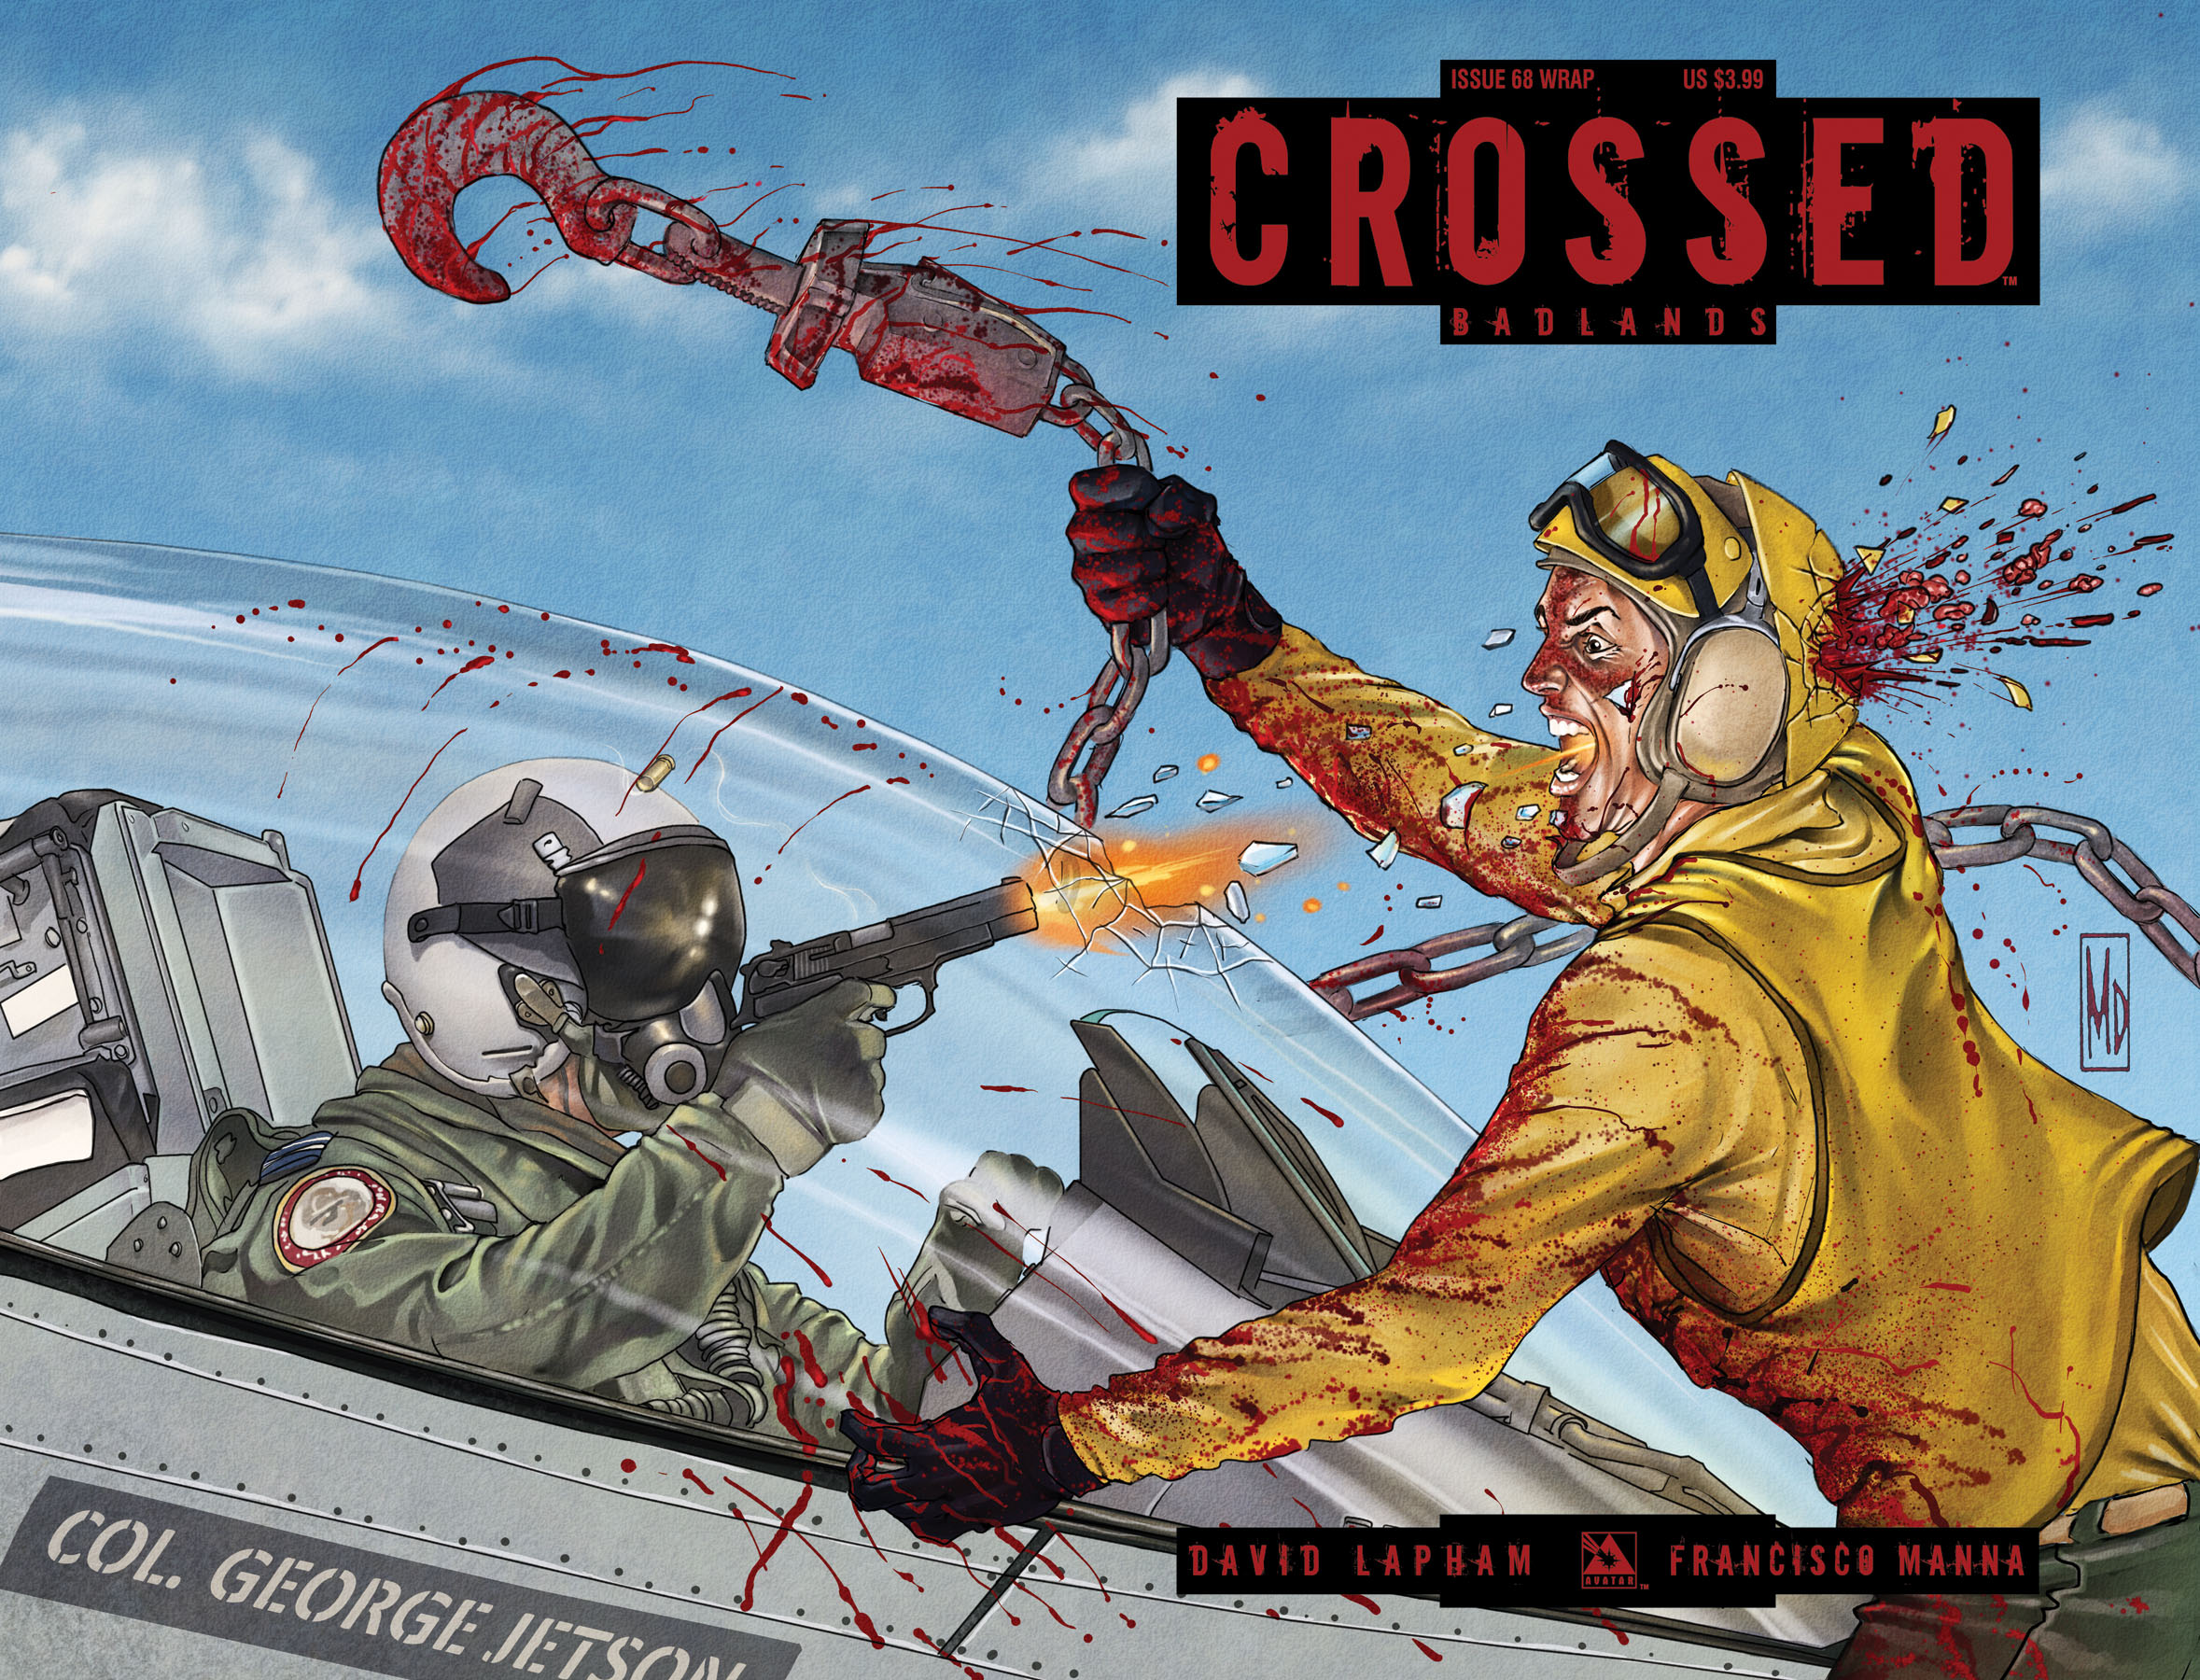 Read online Crossed: Badlands comic -  Issue #68 - 5